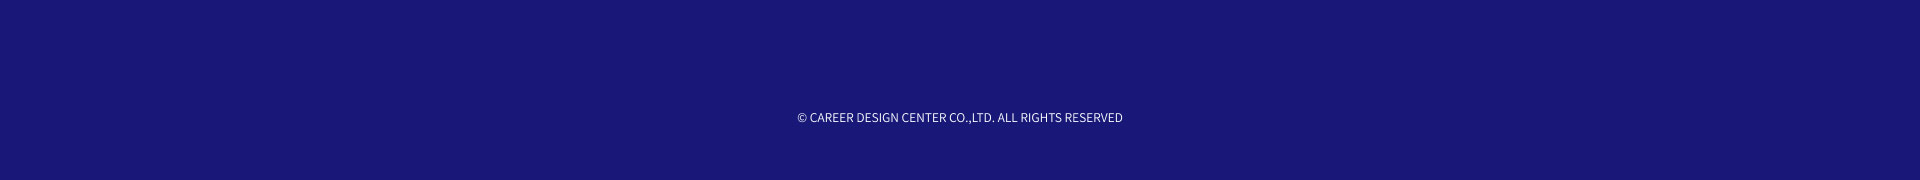 CAREER DESIGN CENTER CO.,LTD.ALL RIGHTS RESERVED